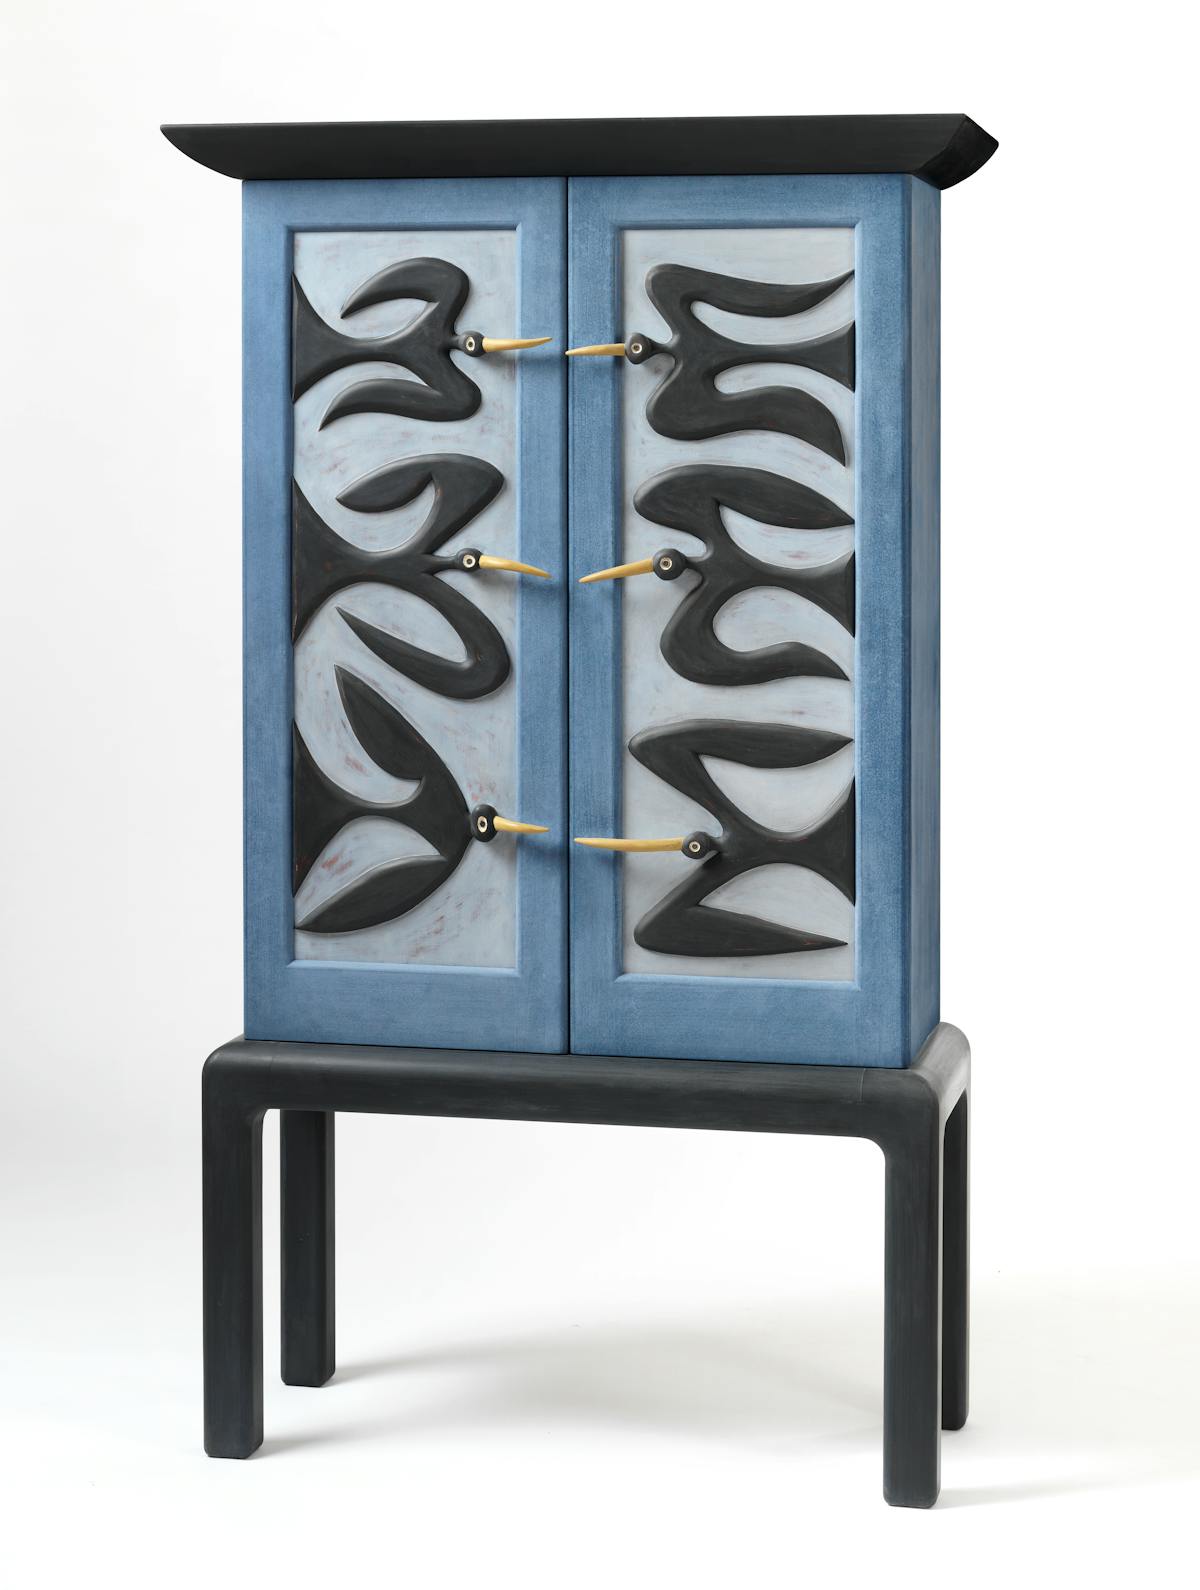 blue and black cabinet with bird motif with beaks providing door handles